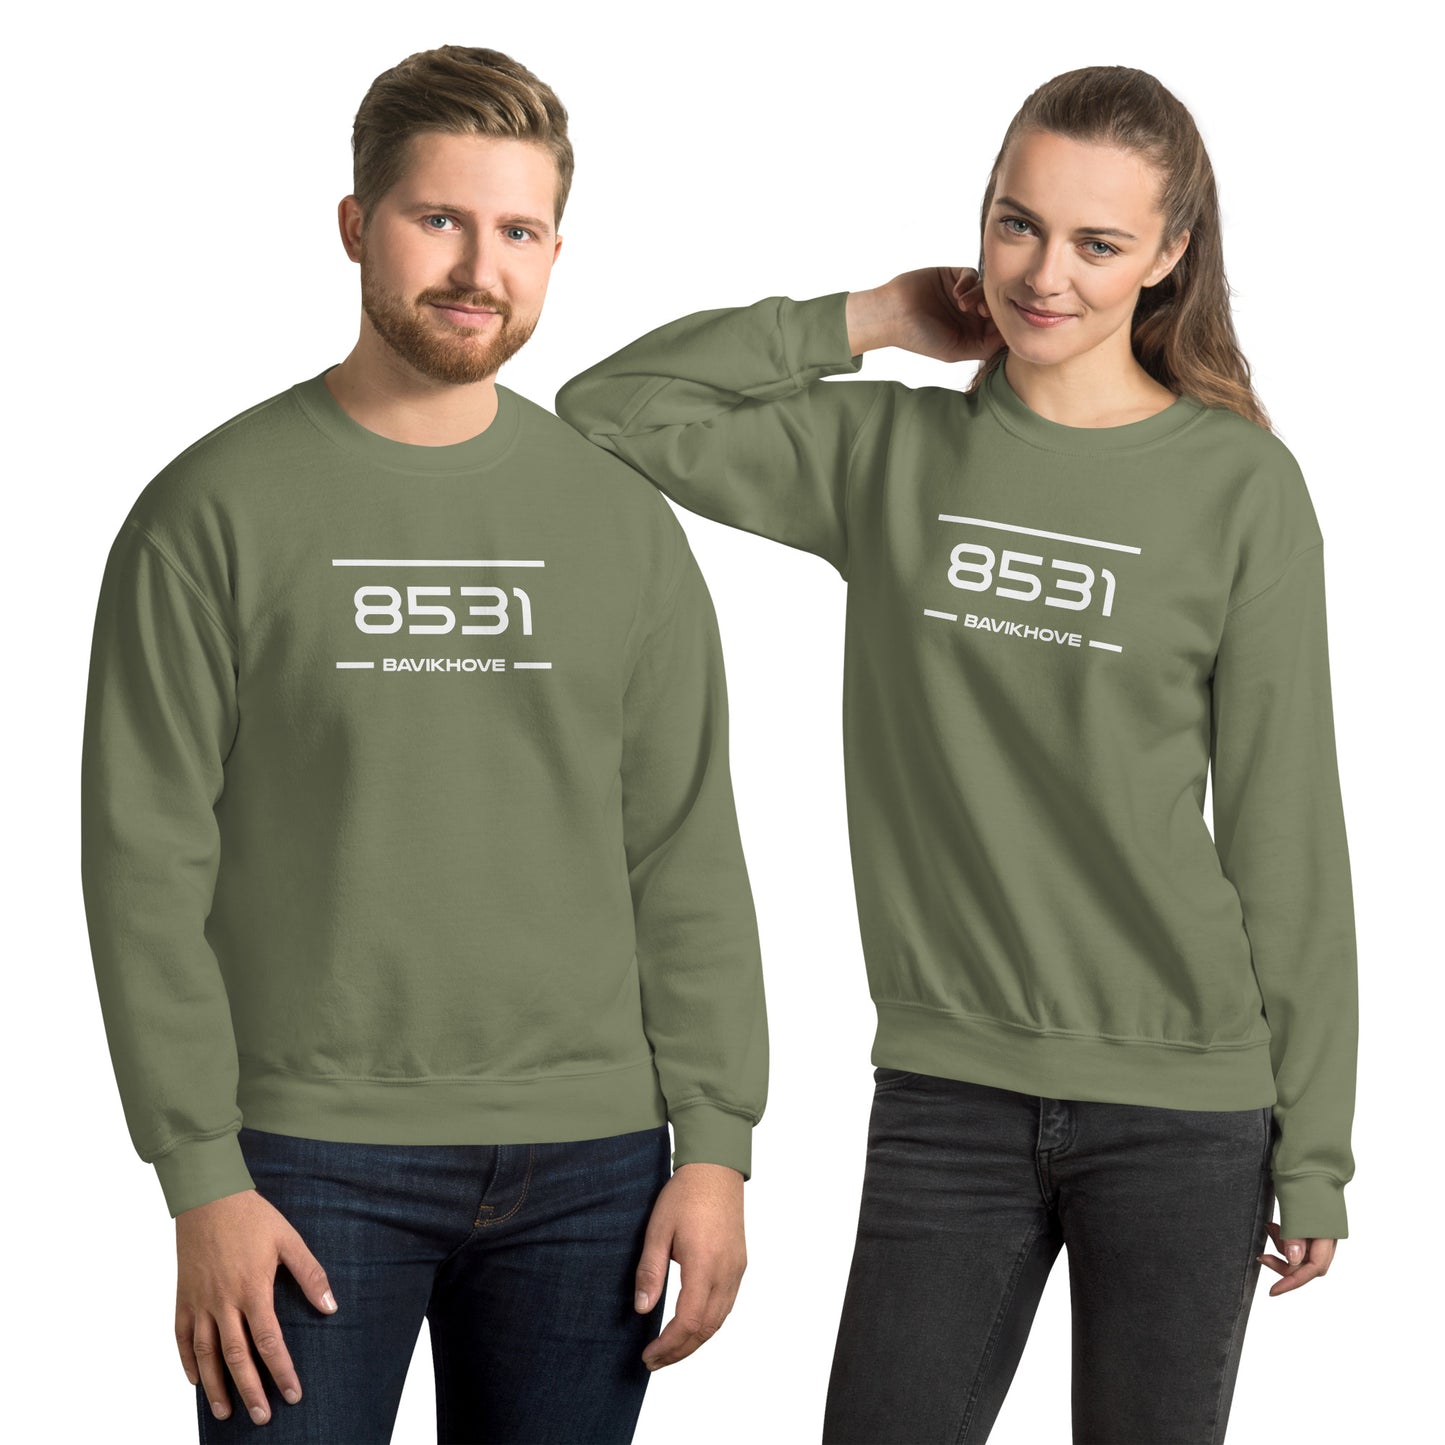 Sweater - 8531 - Bavikhove (M/V)